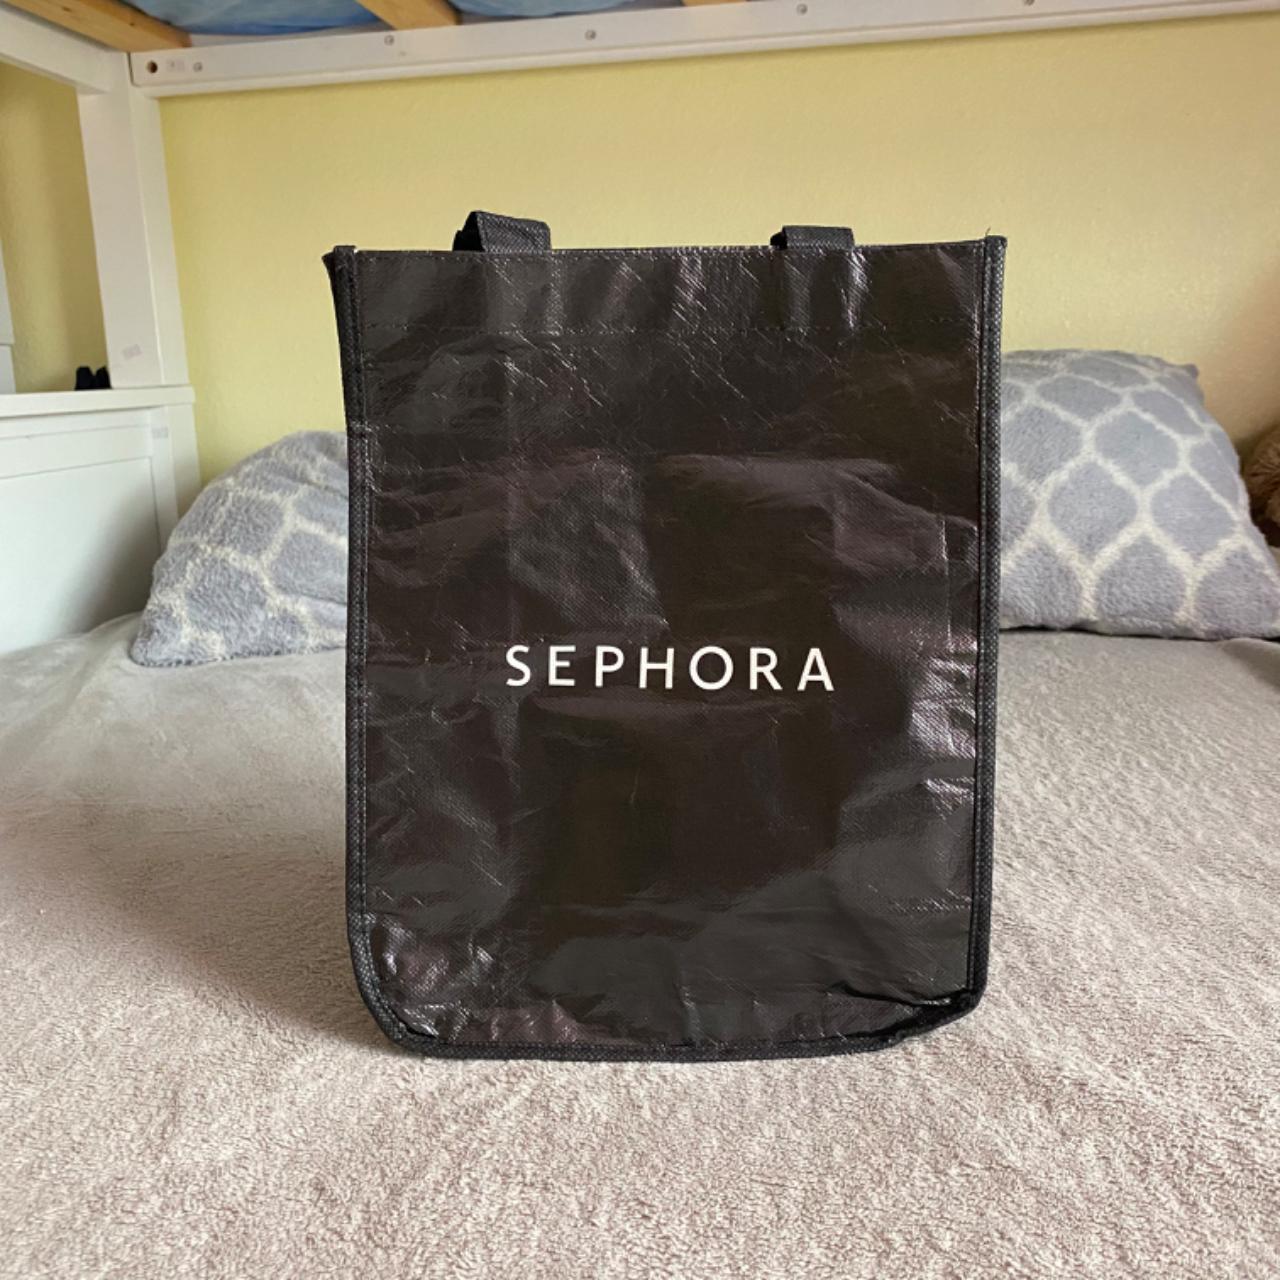 Sephora Women's Black and White Bag (2)